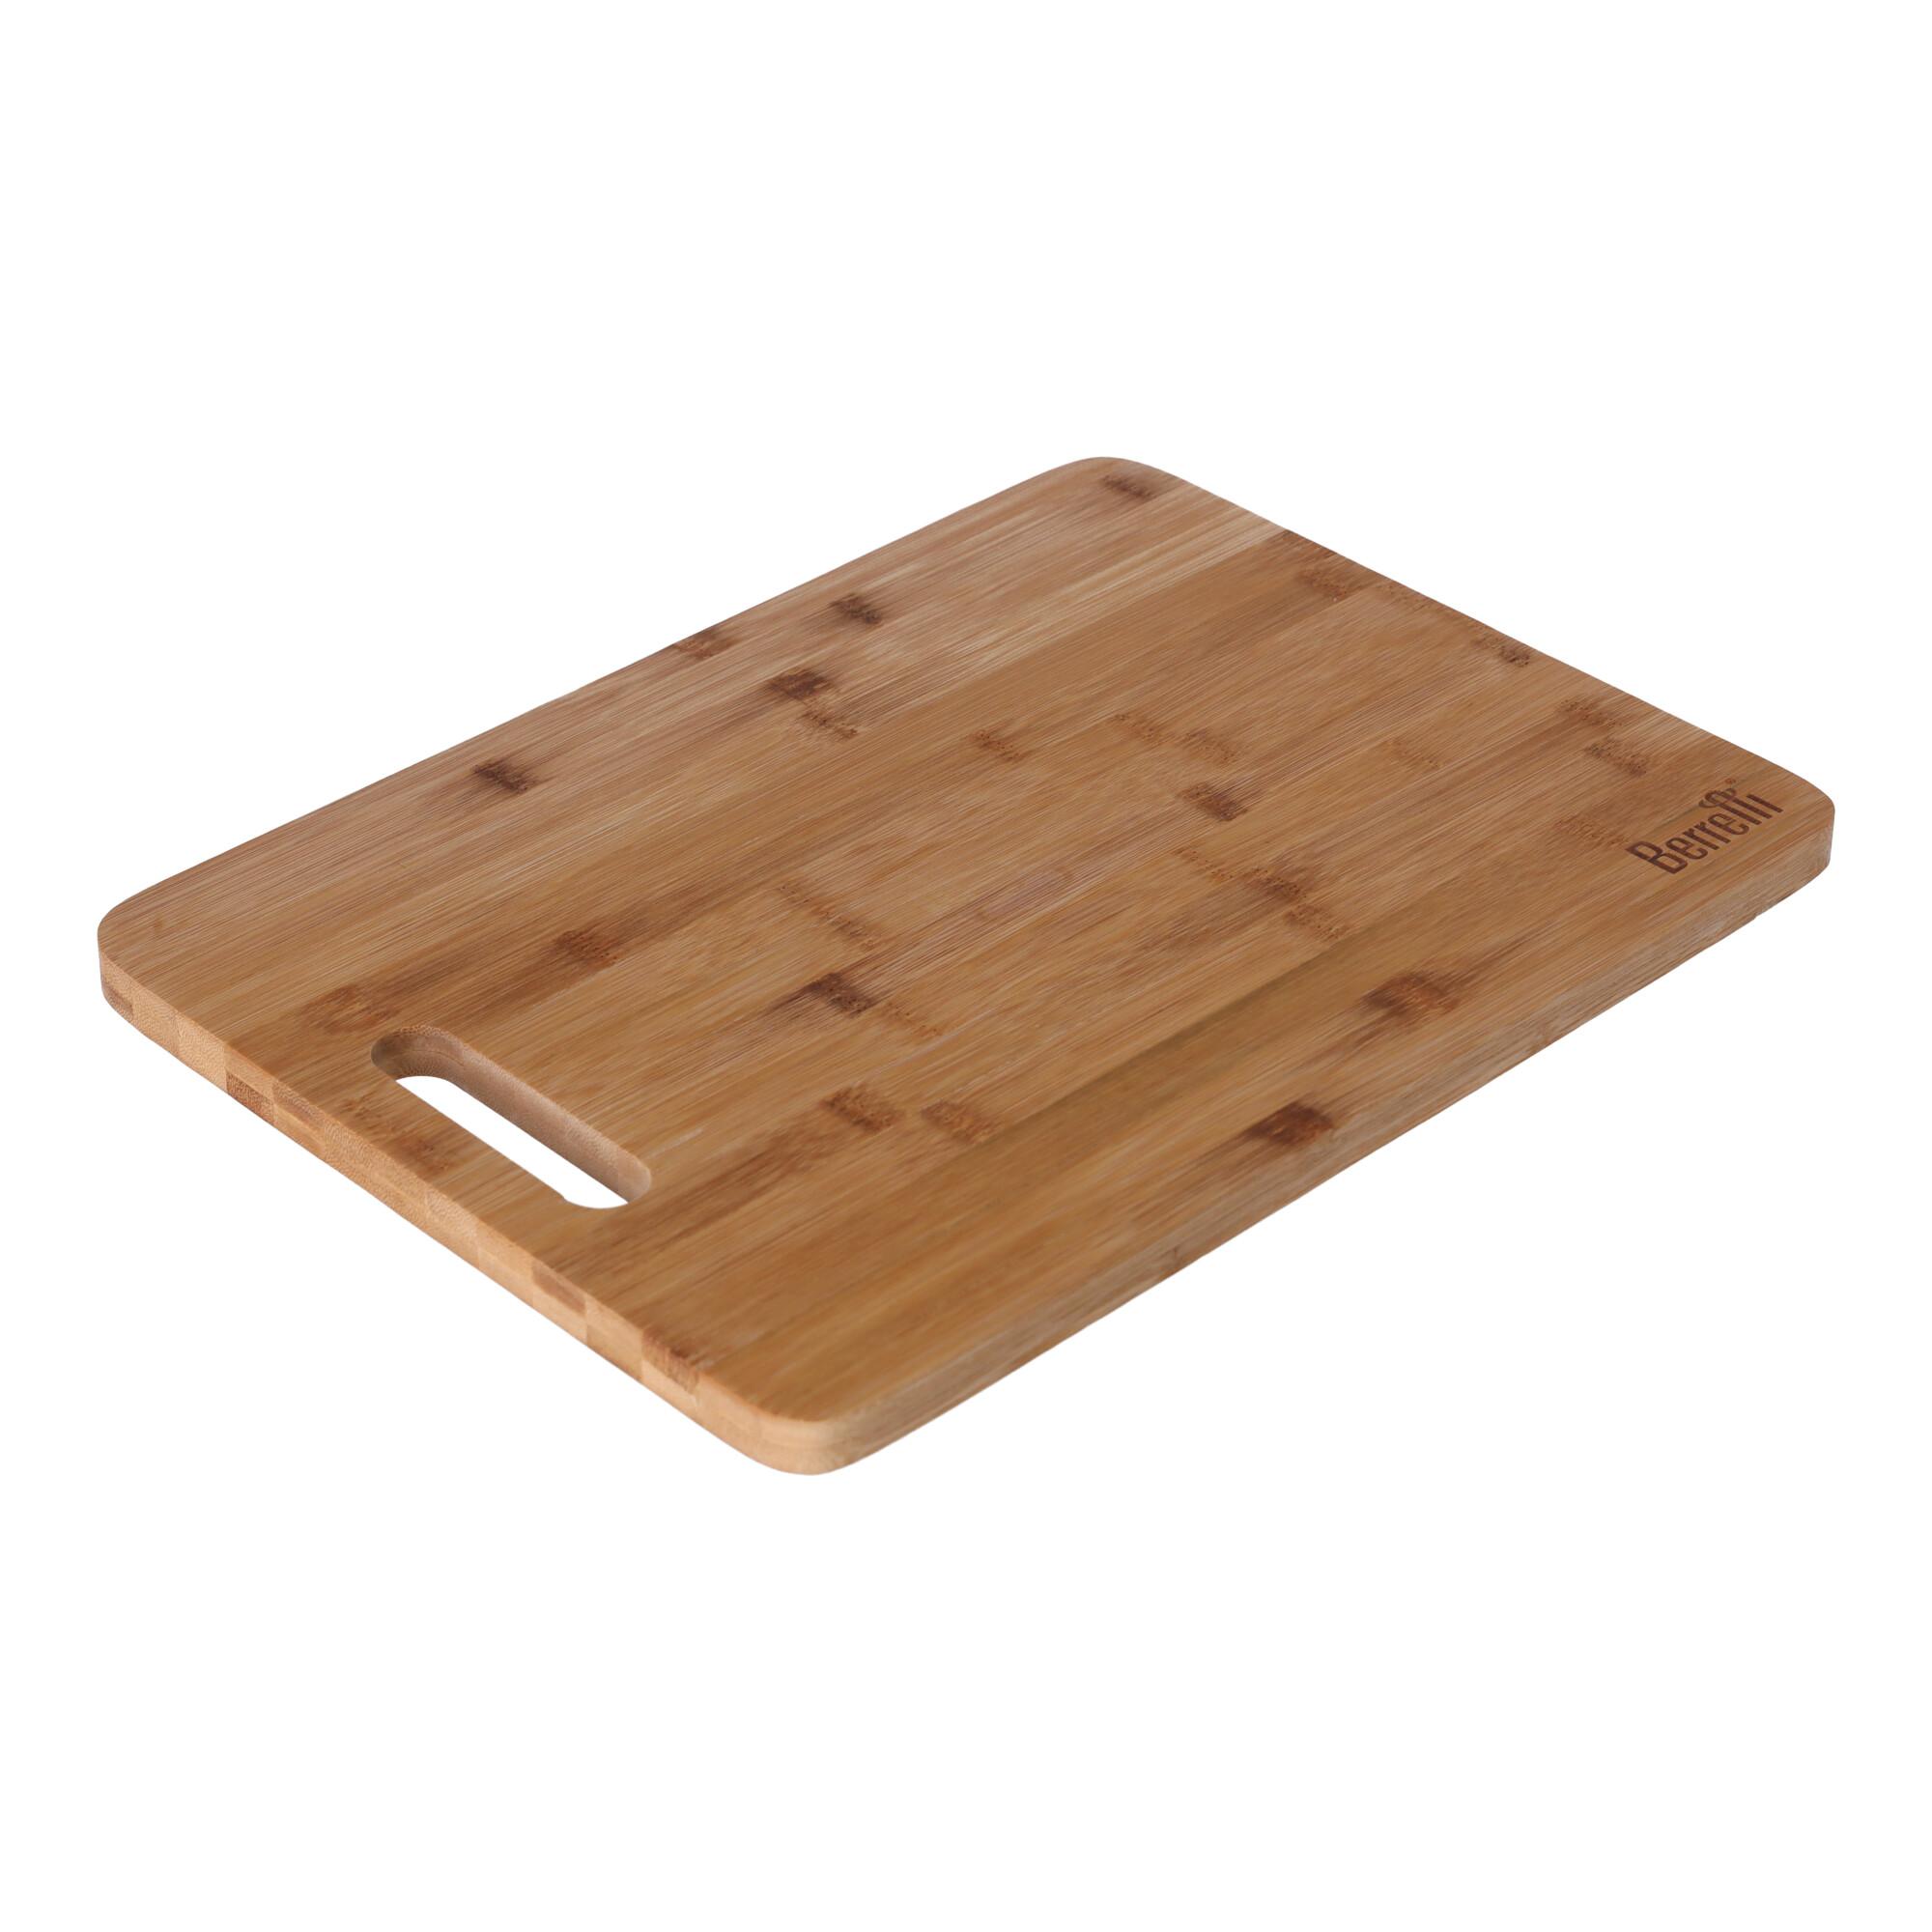 Bamboo cutting board BERRETTI, size 38x28x1.5 cm